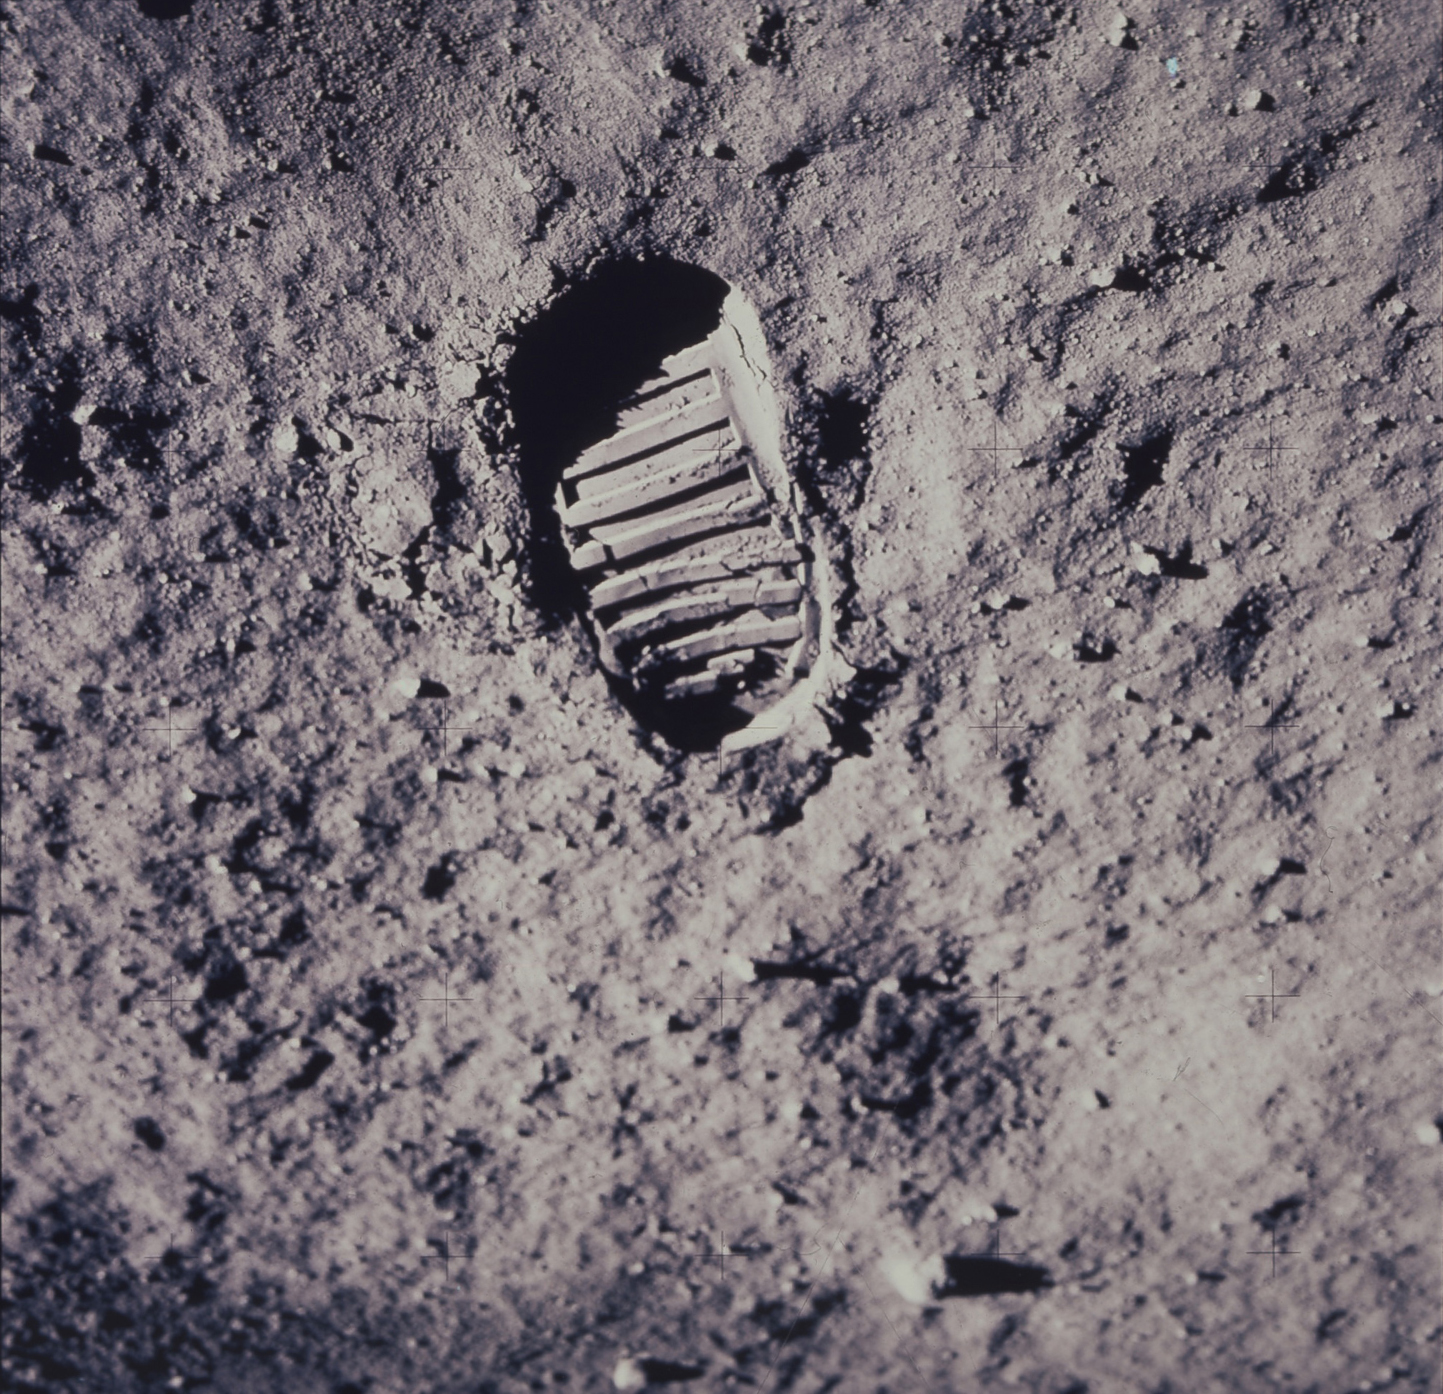 Footprint left on the moon by Apollo 11 astronaut, 1969.